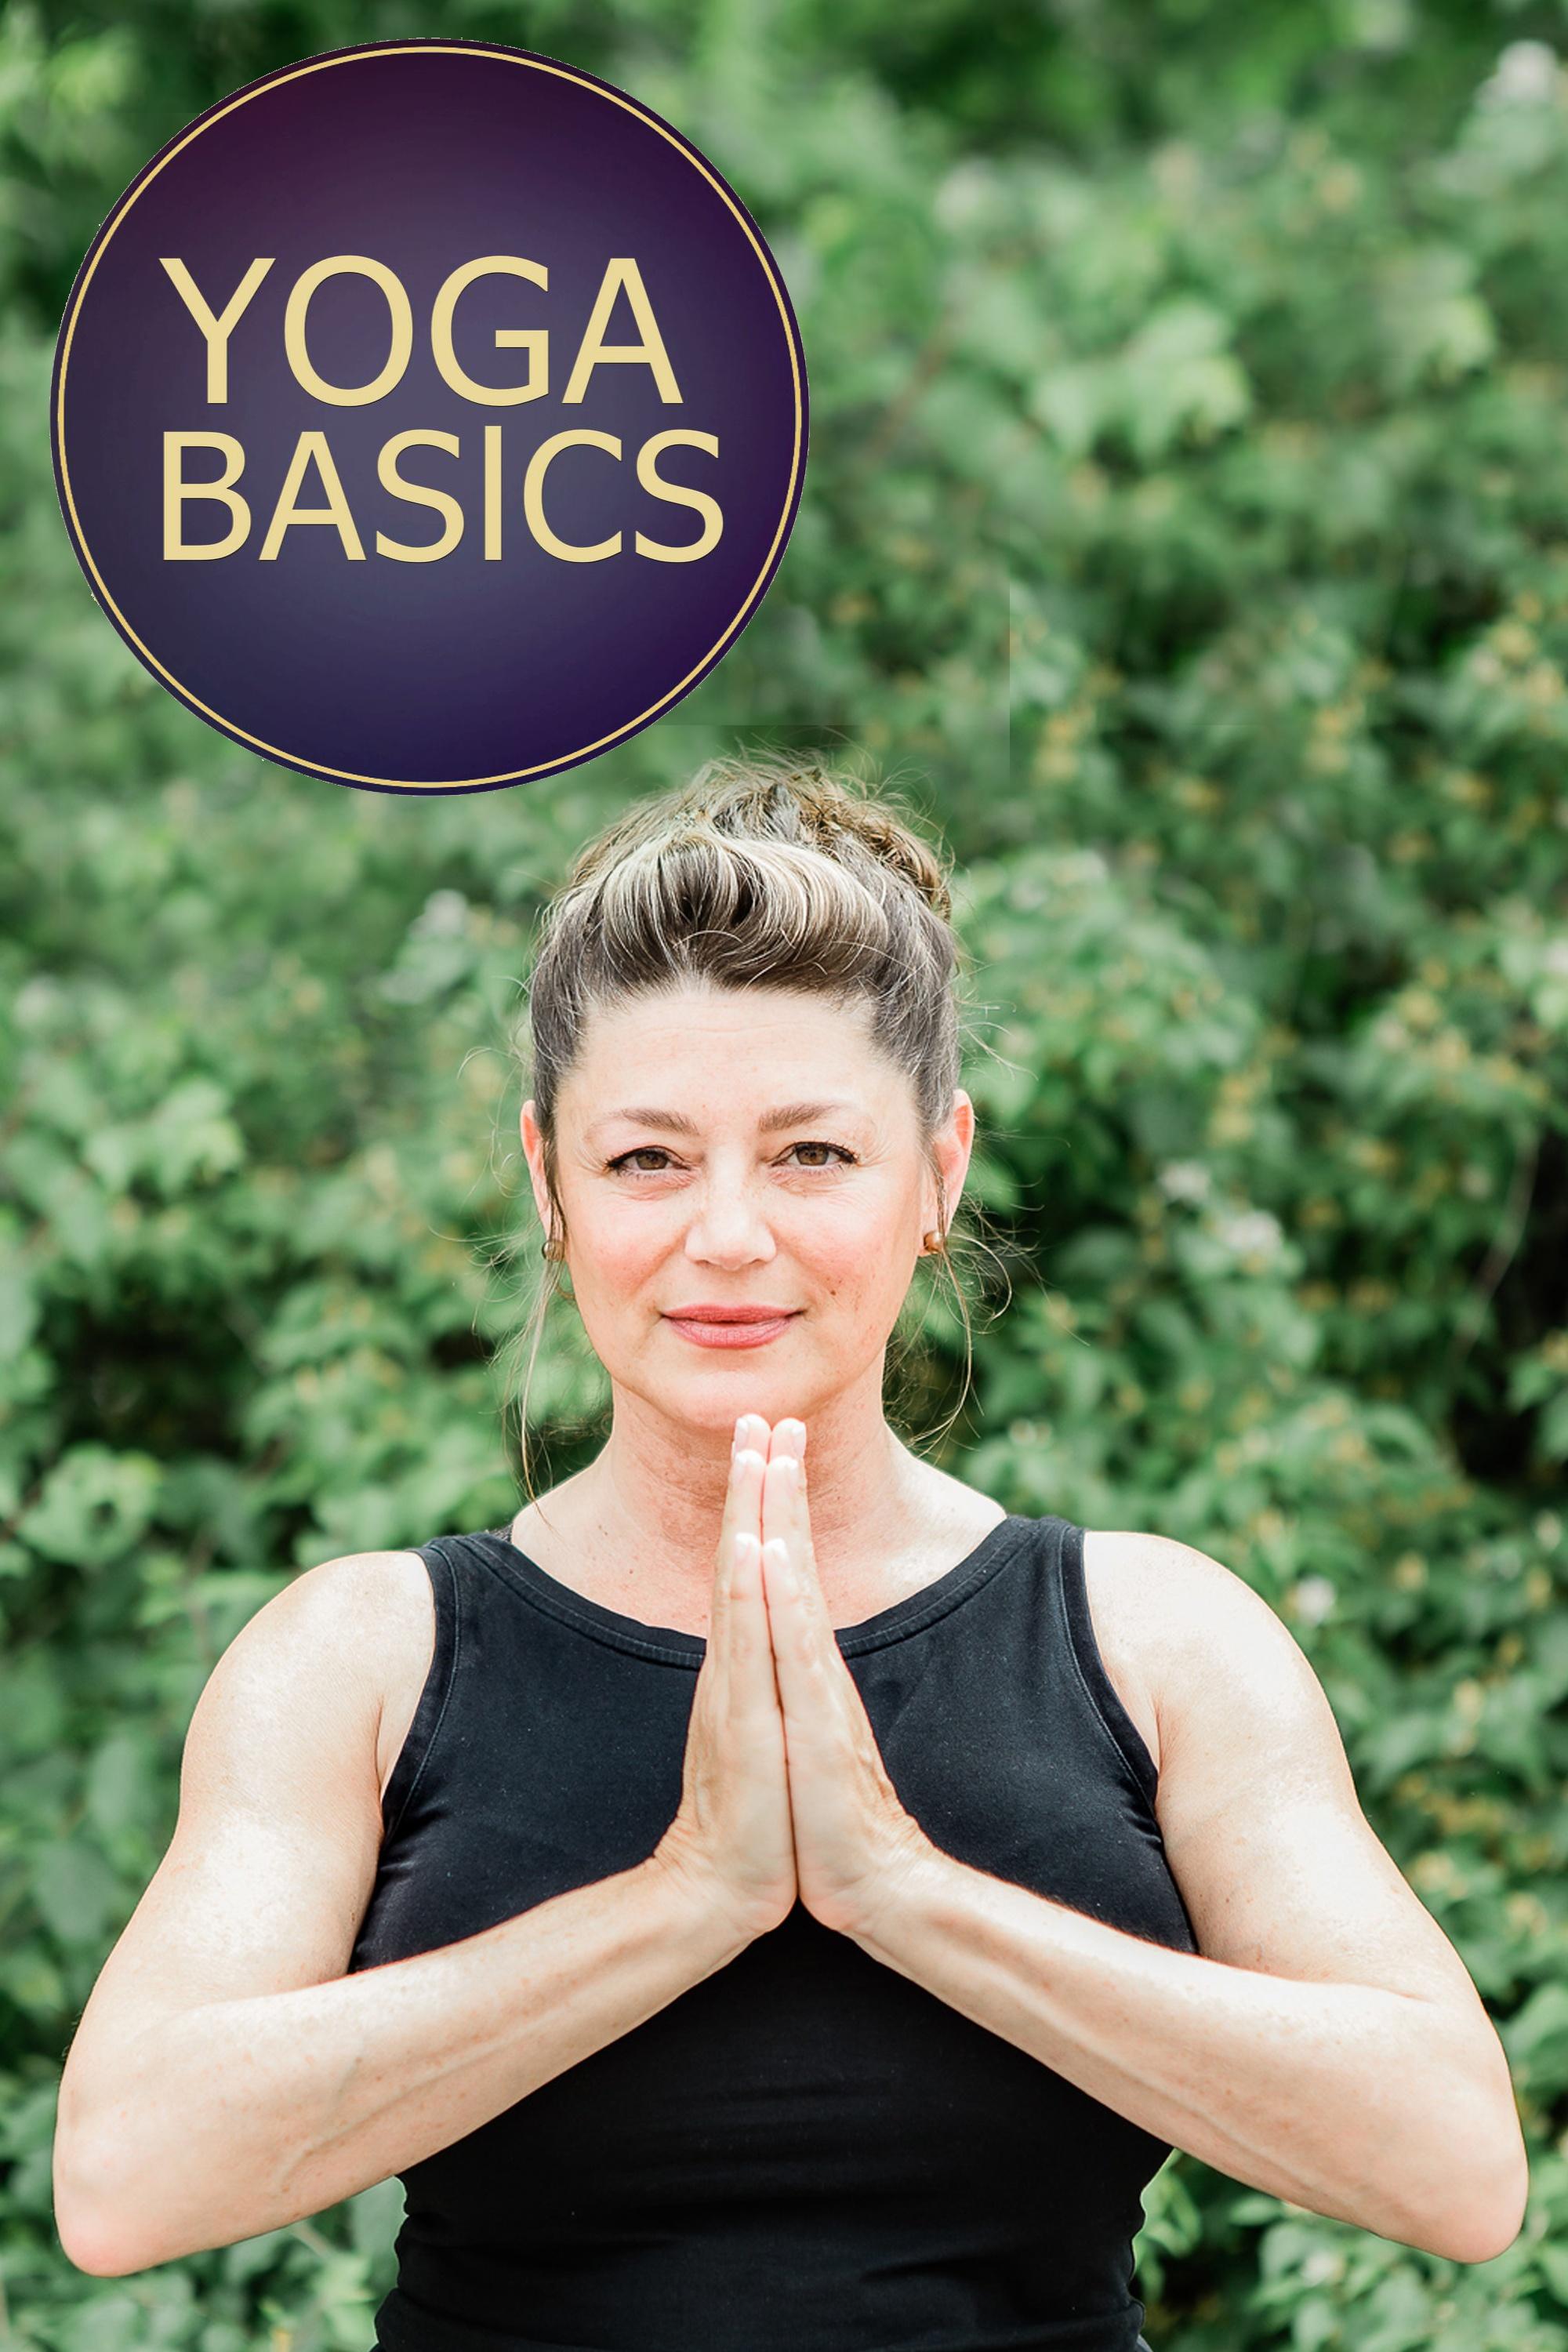 Yoga Basics with patty